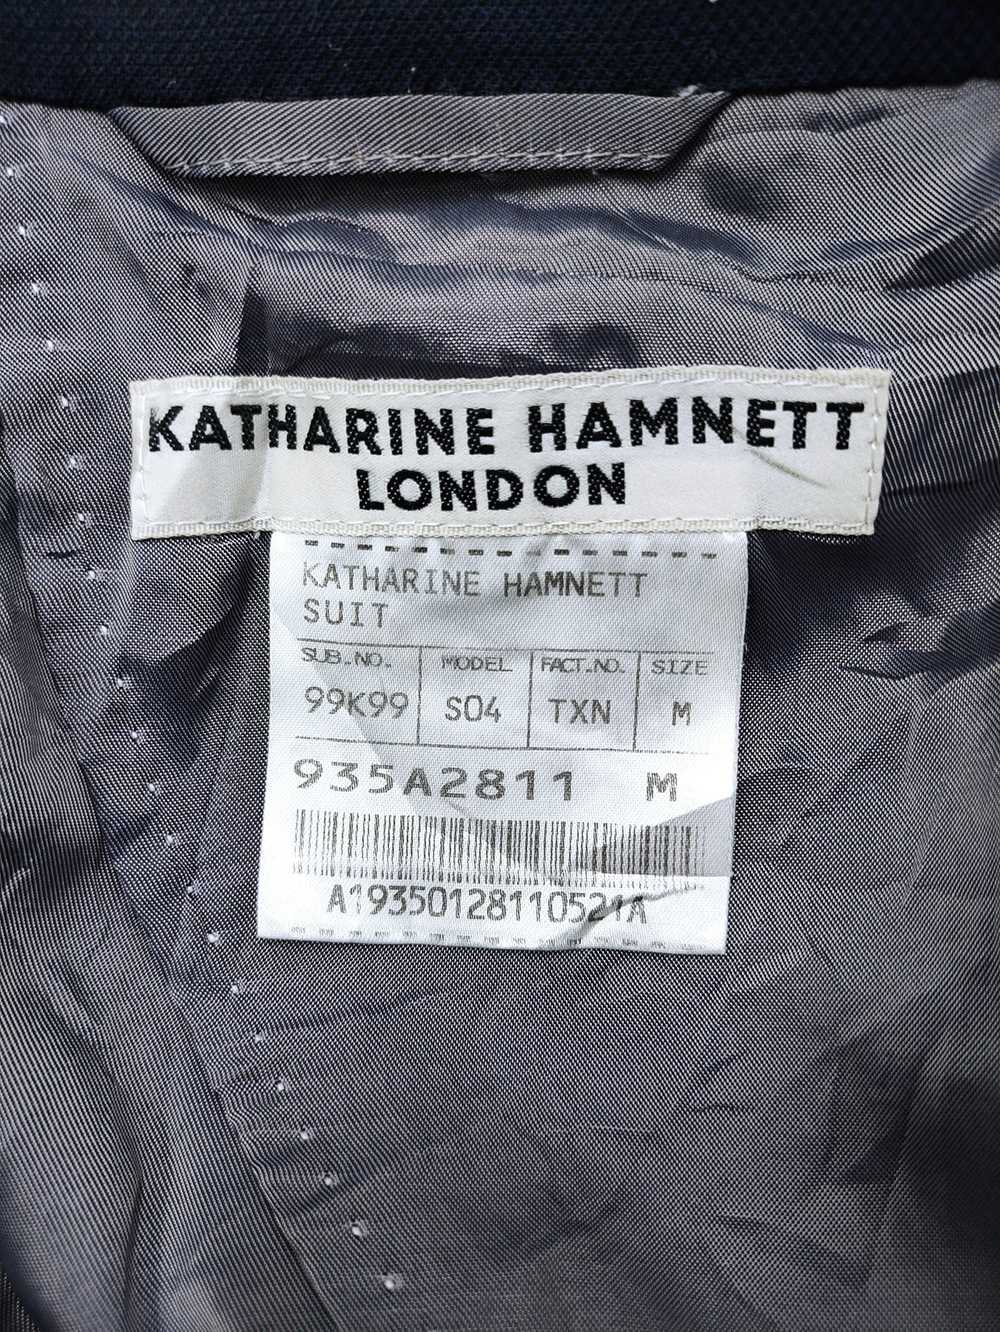 Katharine Hamnett London KATHARINE HAMNETT SUIT - image 5